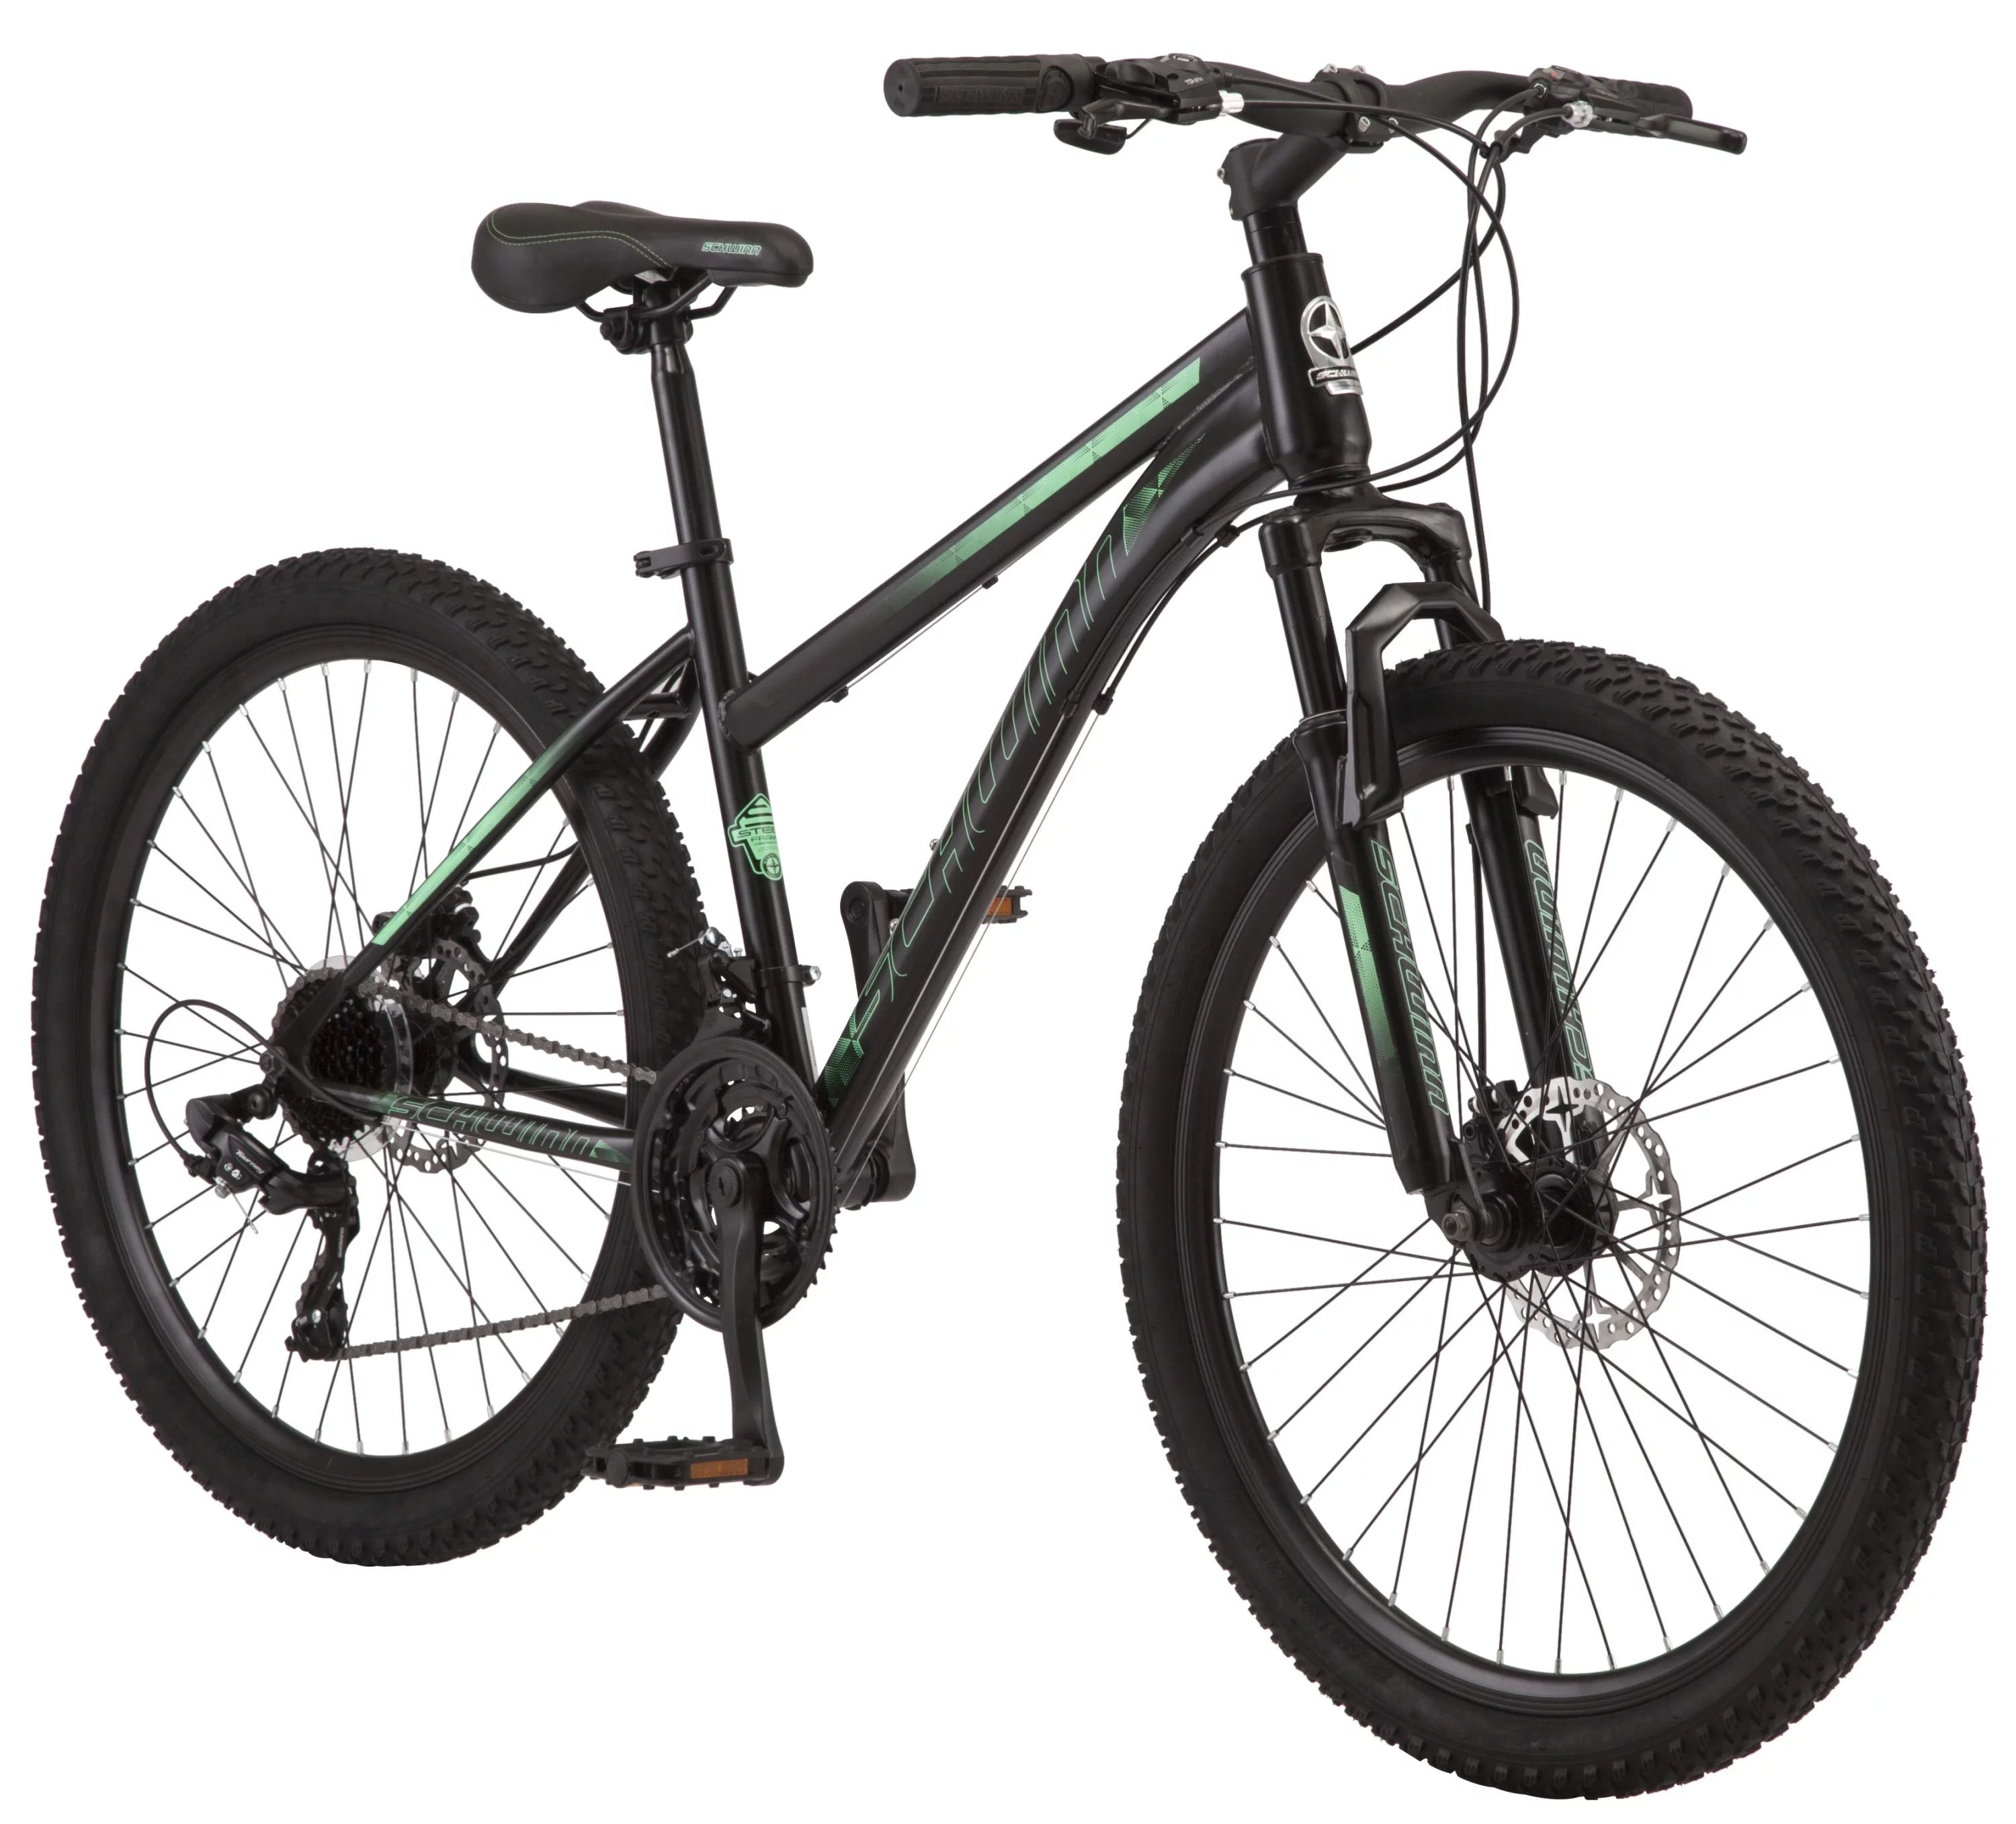 Schwinn Sidewinder Mountain Bike, 26-inch wheels, black/green | Walmart (US)